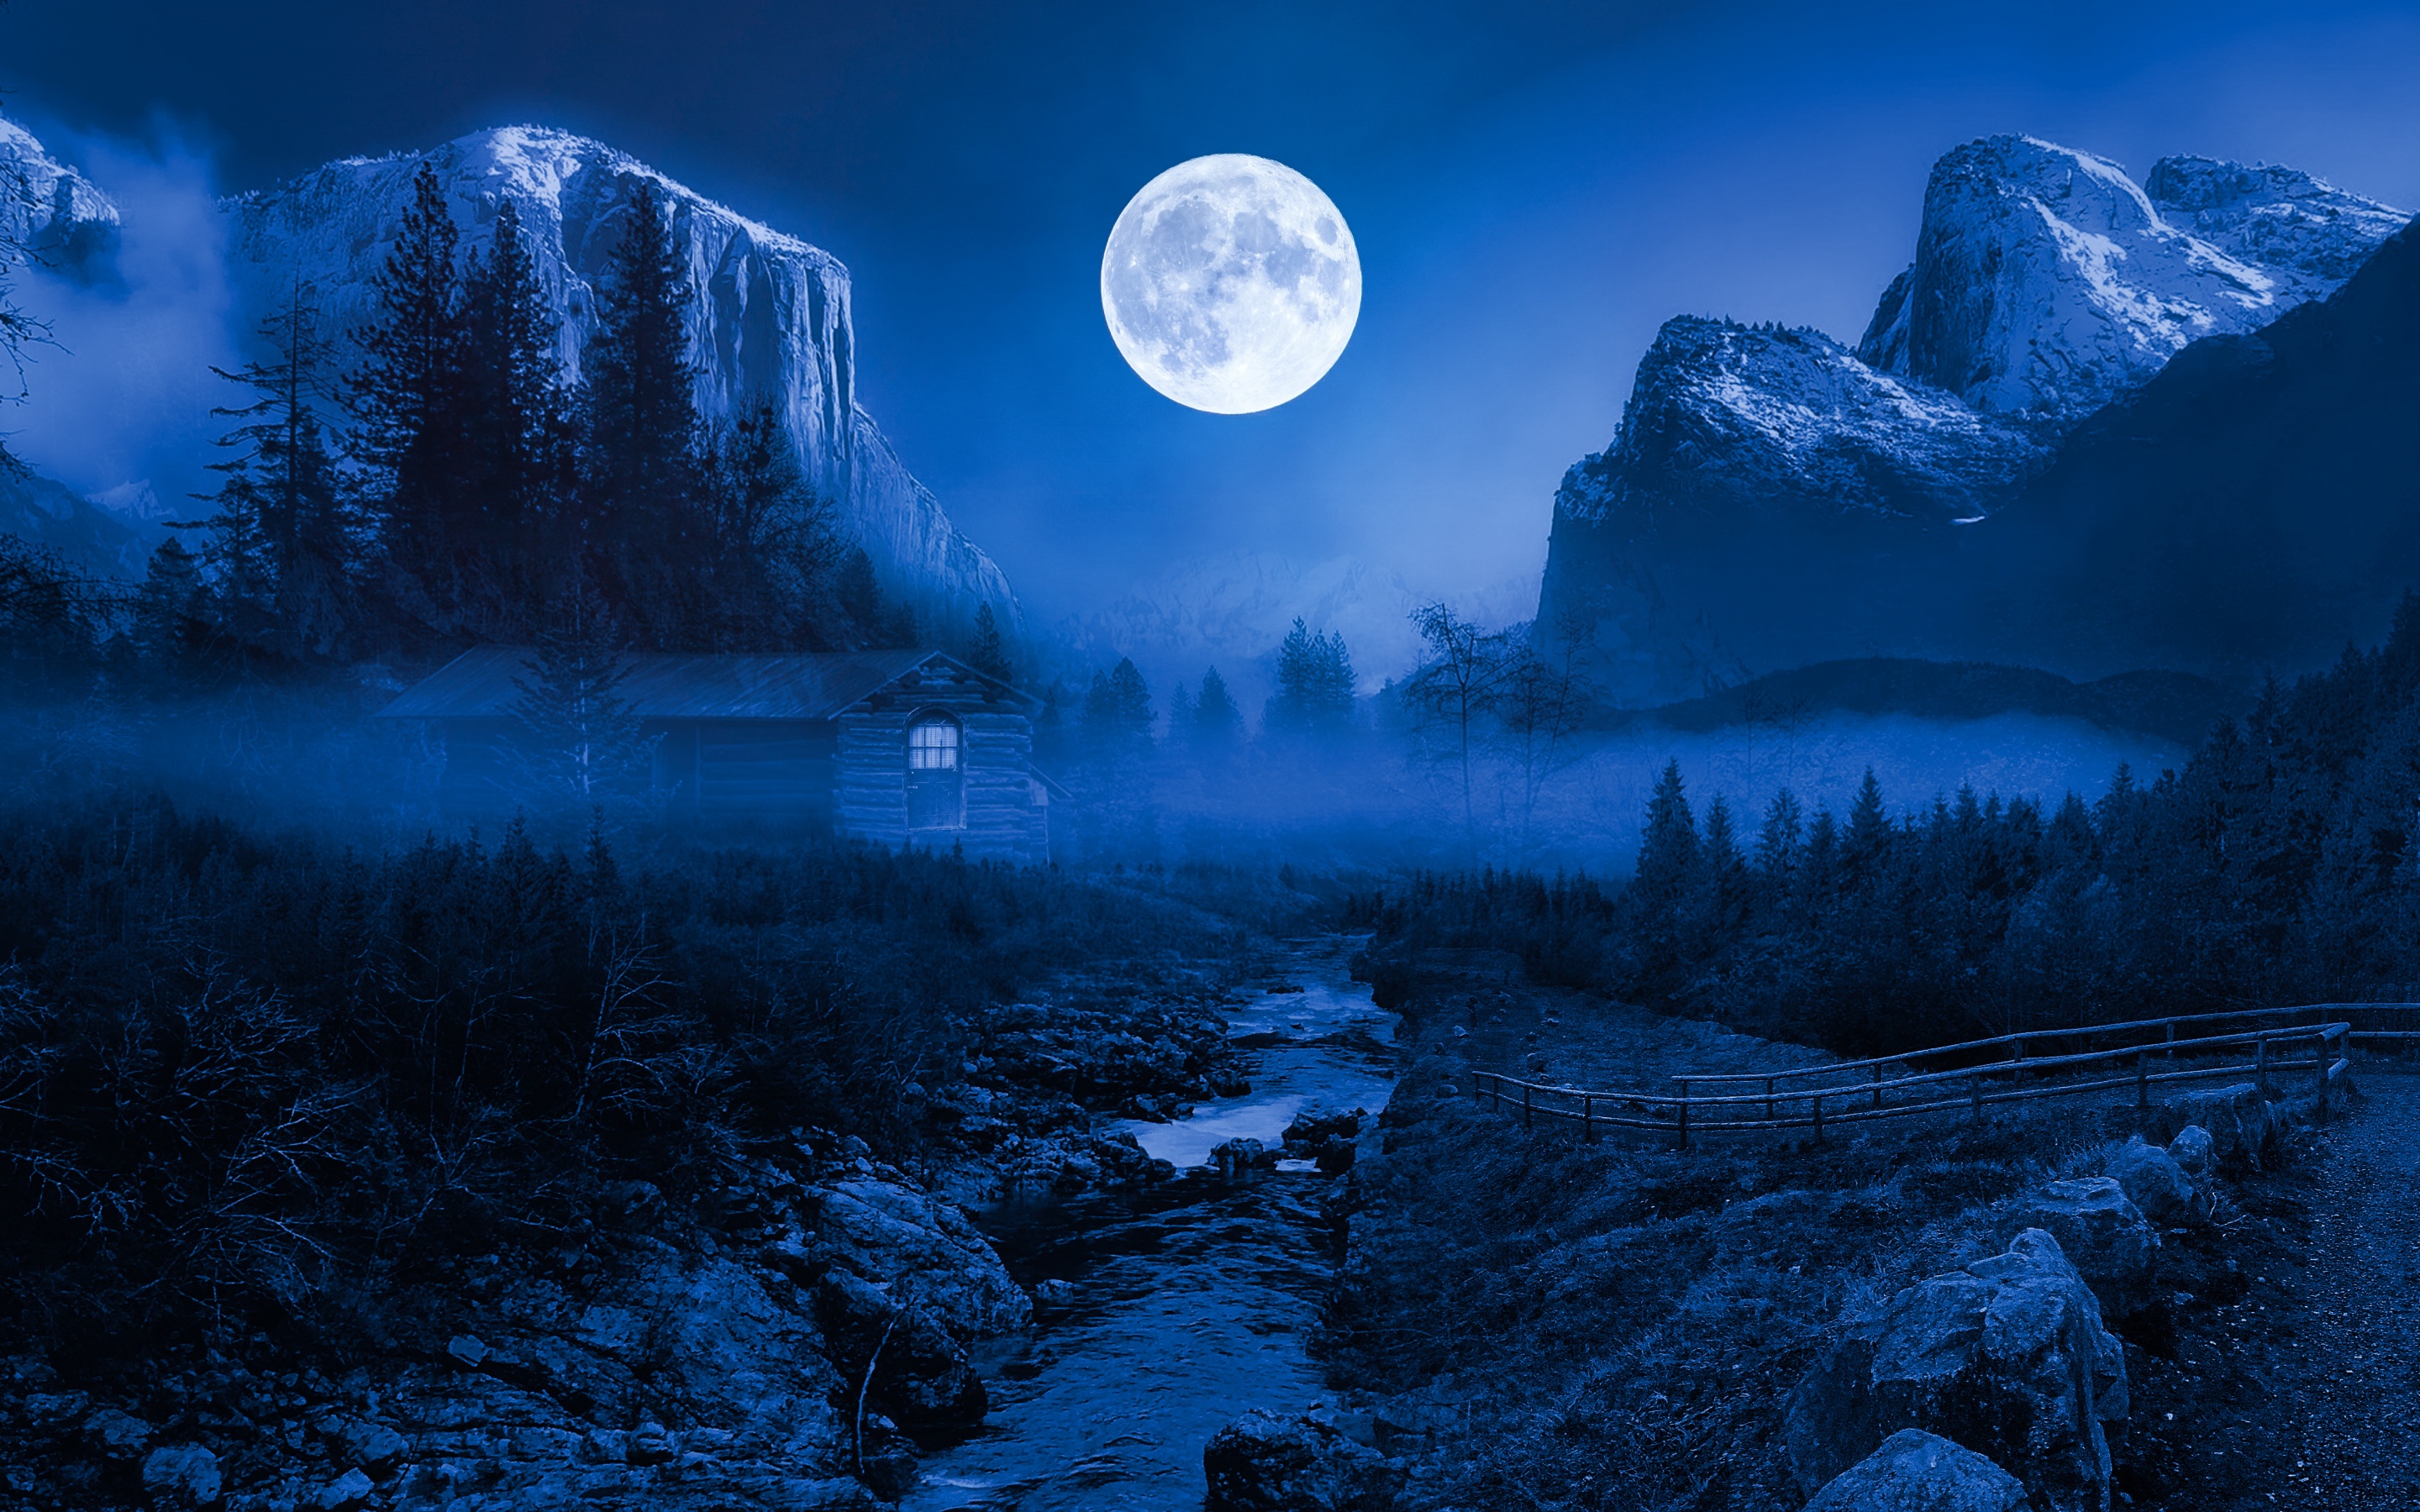 Twilight Moon 4K Wallpaper, Night time, Landscape, Forest, Wooden House